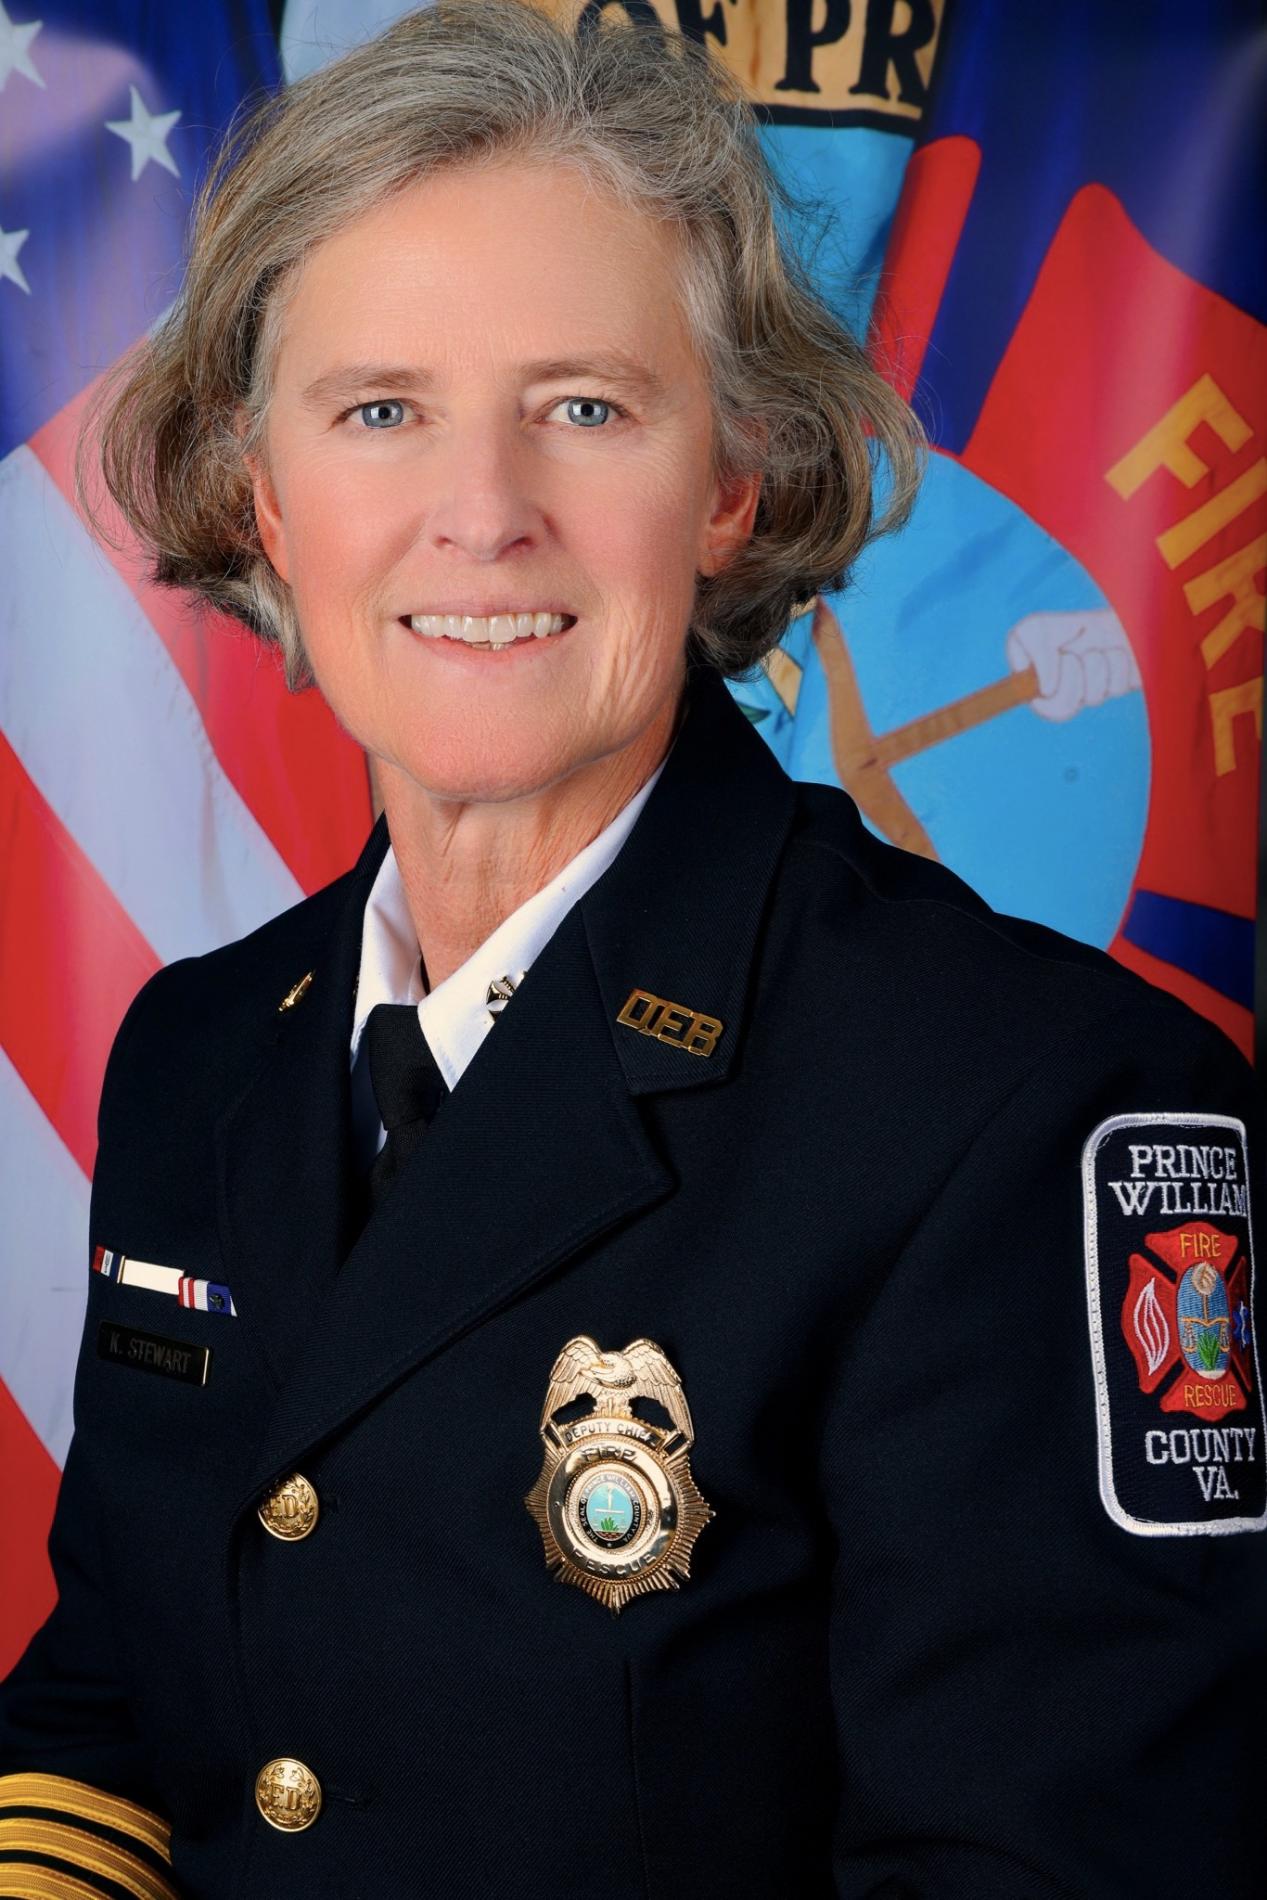 Deputy Chief Kim Stewart